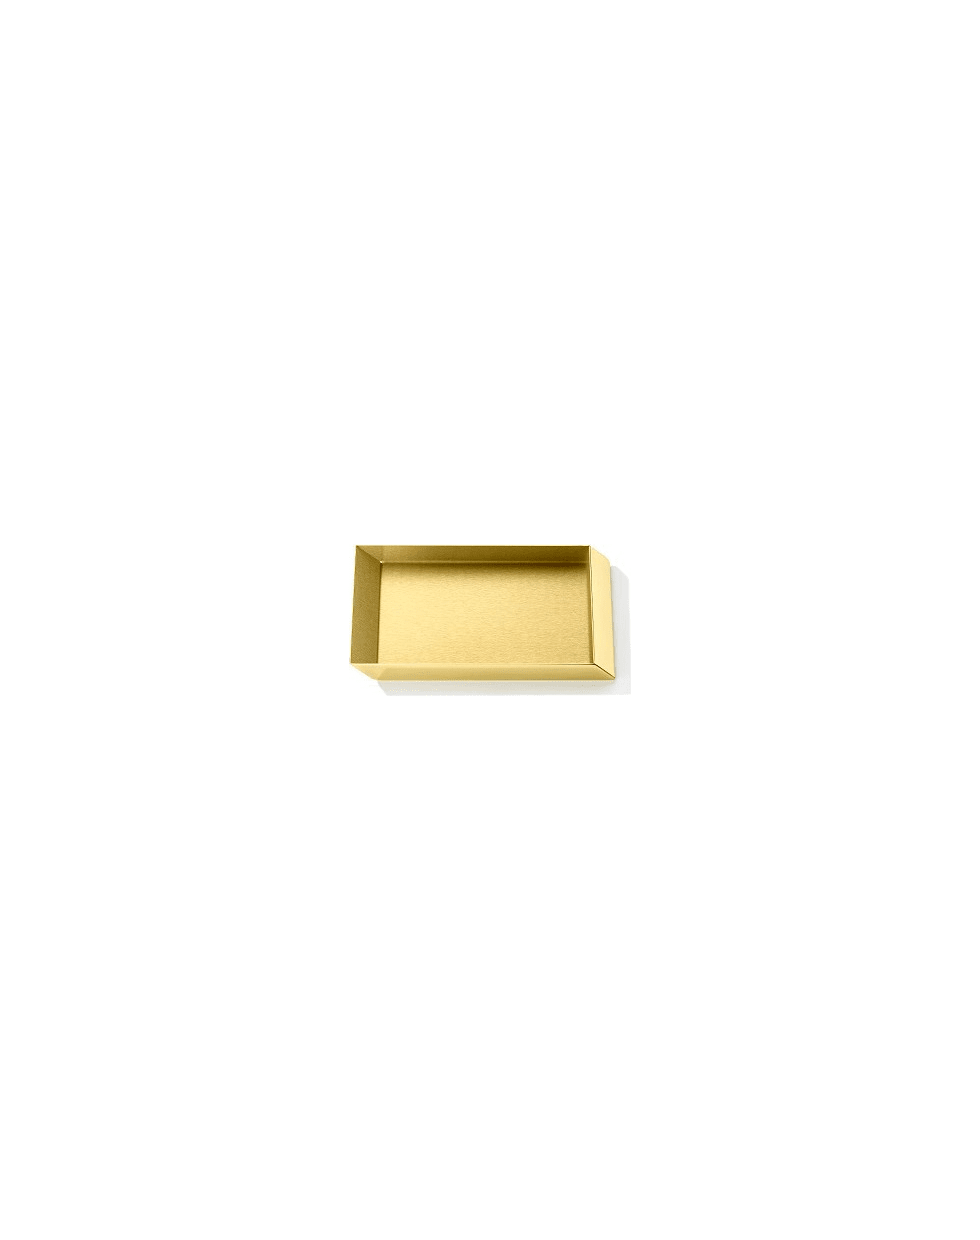 Ghidini 1961 Axonometry - Rectangular Small Tray Polished Brass - Polished brass